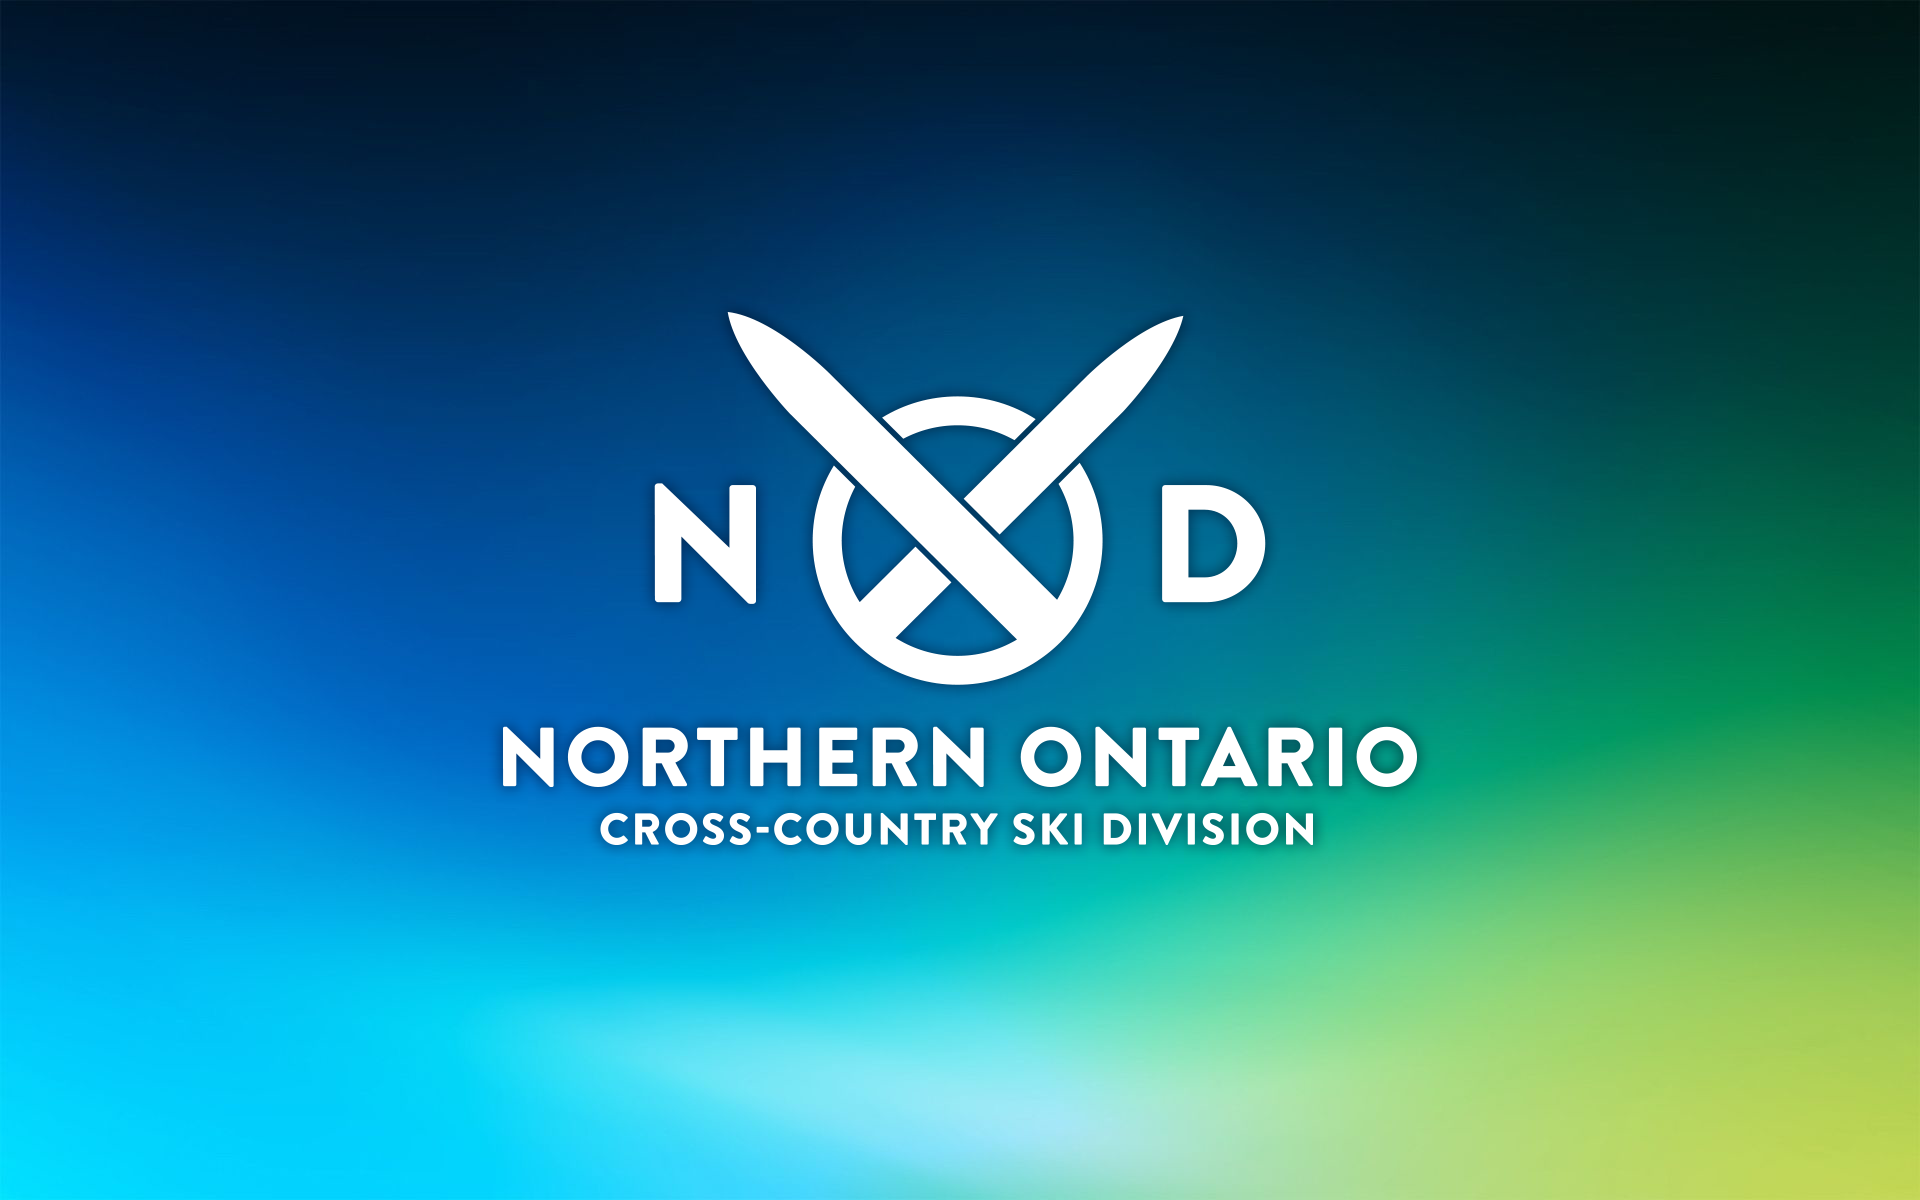 Northern Ontario Cross-Country Ski Division logo